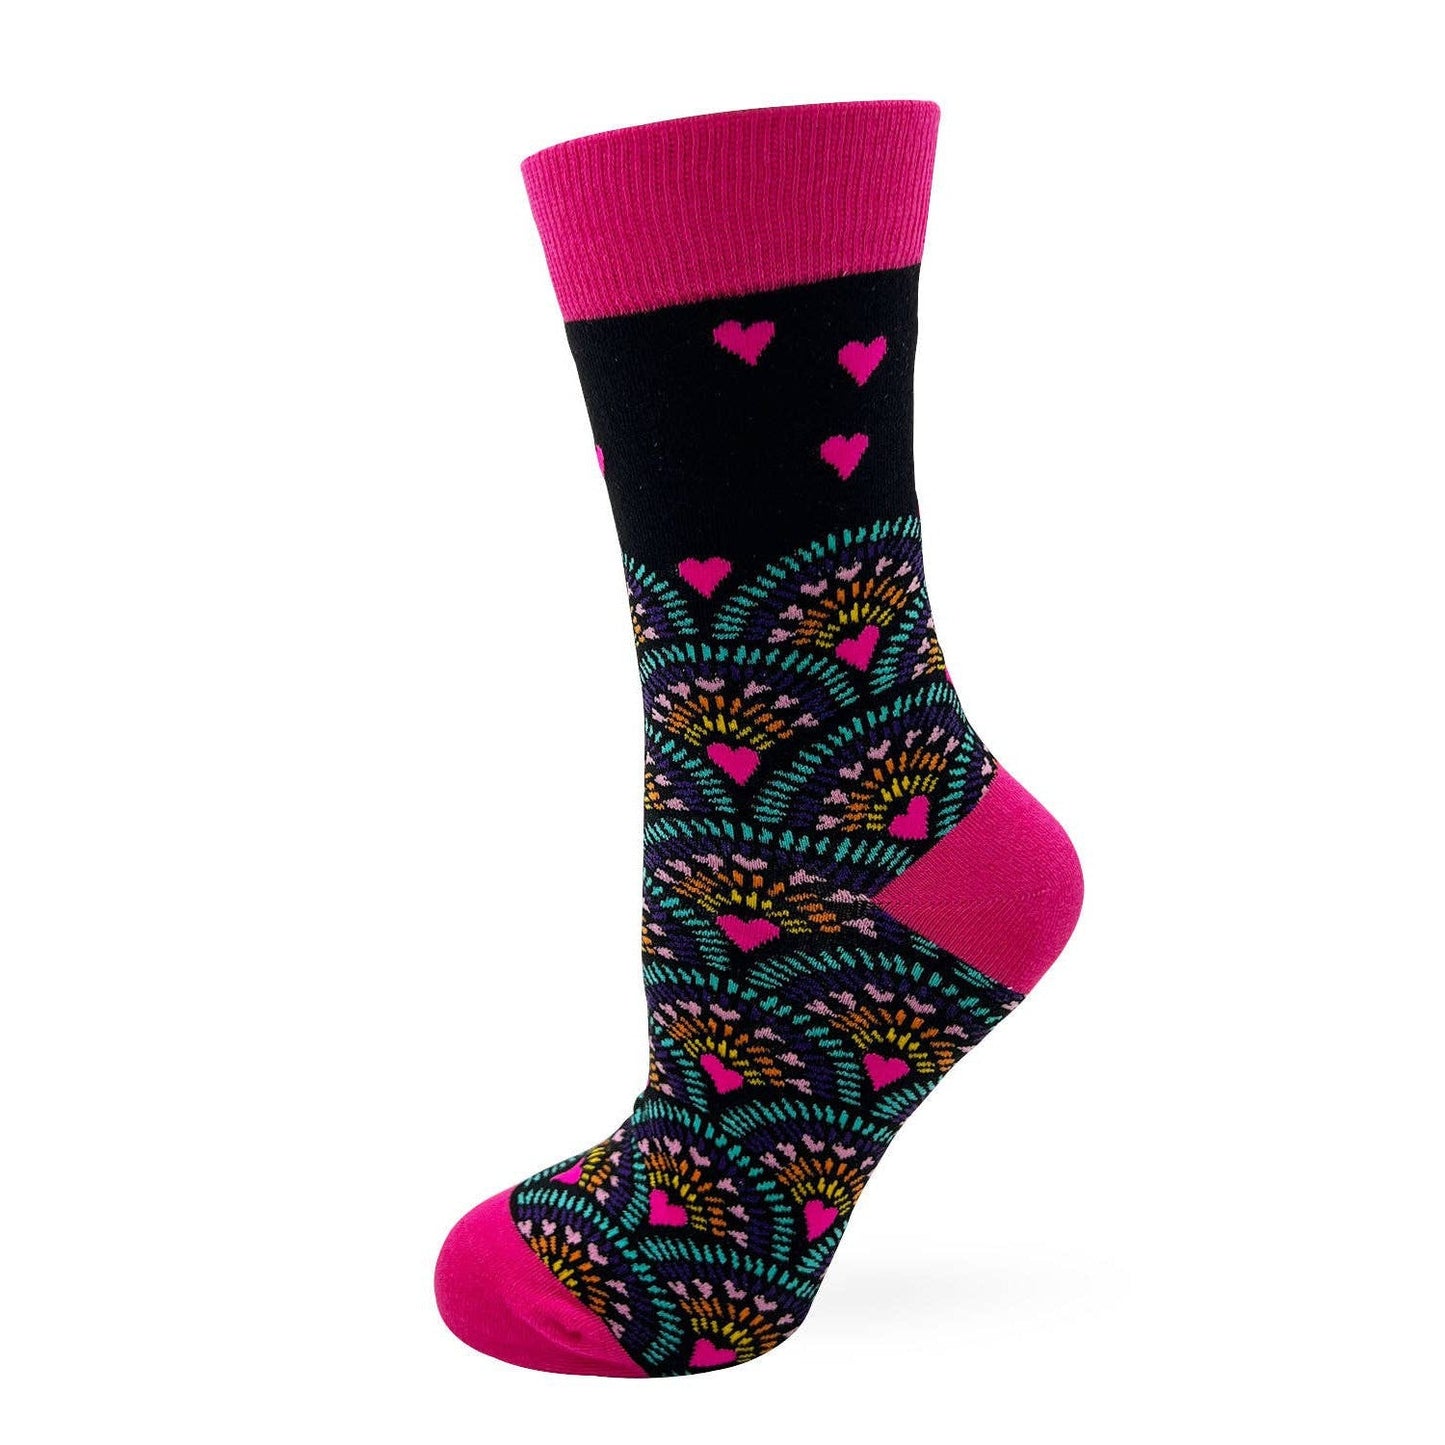 I Fucking Love You Women's Crew Socks | Hearts Design Ladies Novelty Socks